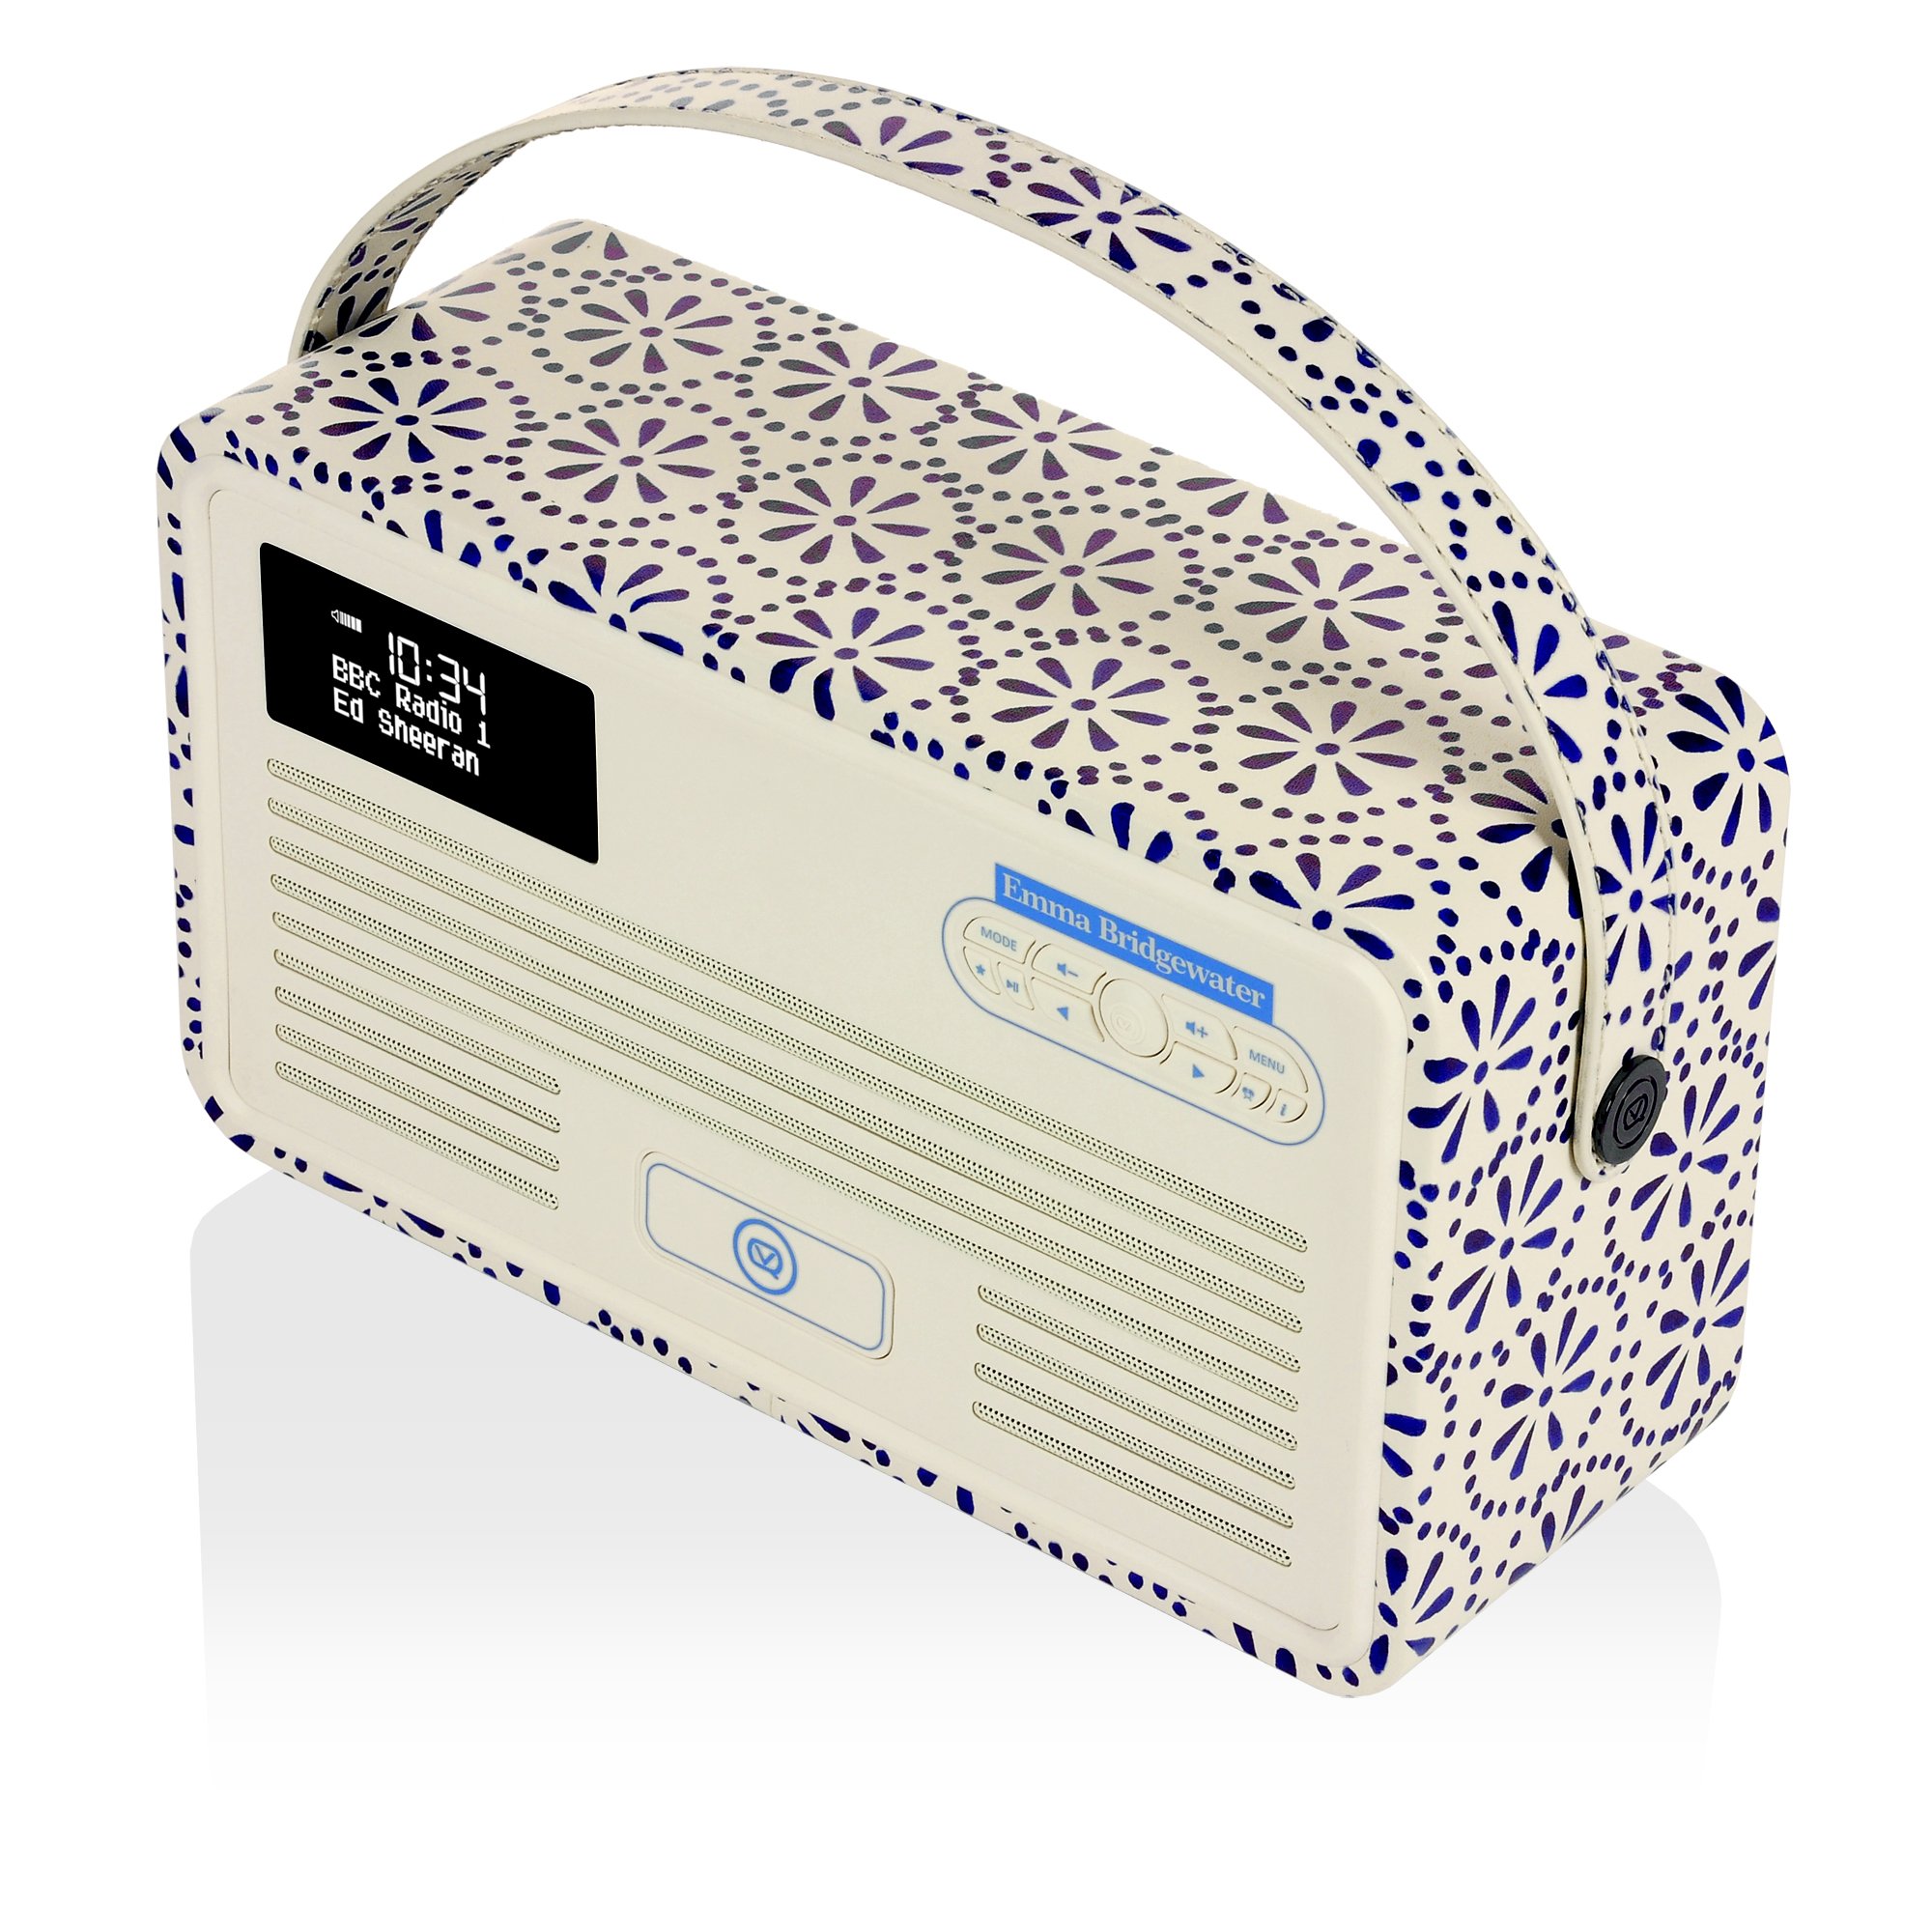 B01MU97ULK VQ Retro Mk II DAB & DAB+ Digital Radio with FM, Bluetooth, Apple Lightning Dock & Alarm Clock Emma Bridgewater Blue Daisy